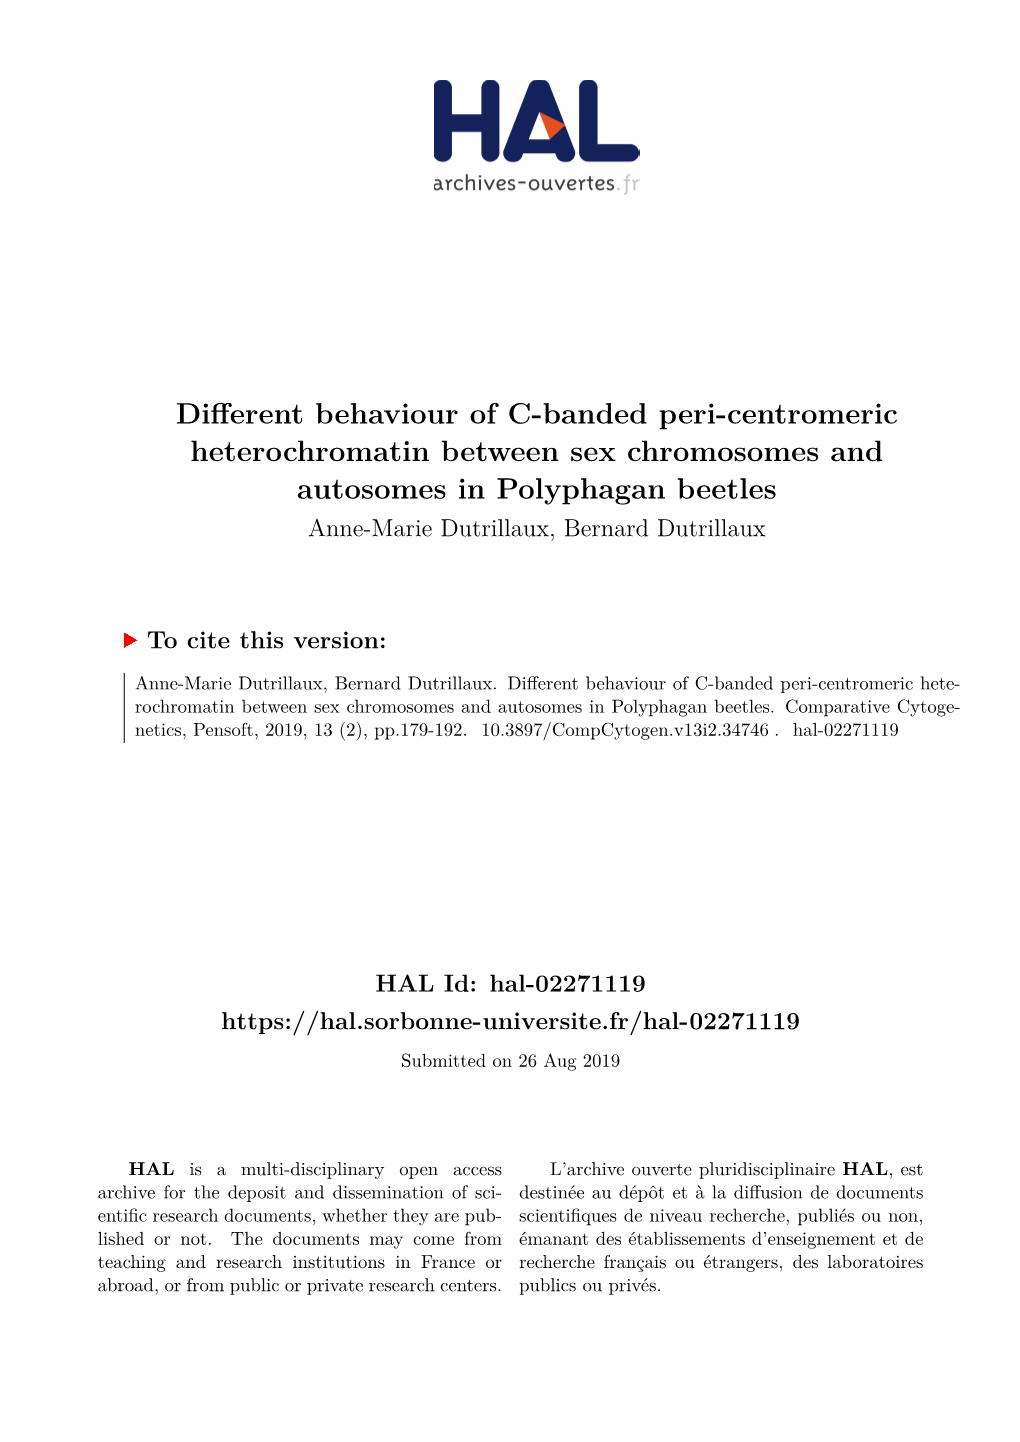 Different Behaviour of C-Banded Peri-Centromeric Heterochromatin Between Sex Chromosomes and Autosomes in Polyphagan Beetles Anne-Marie Dutrillaux, Bernard Dutrillaux